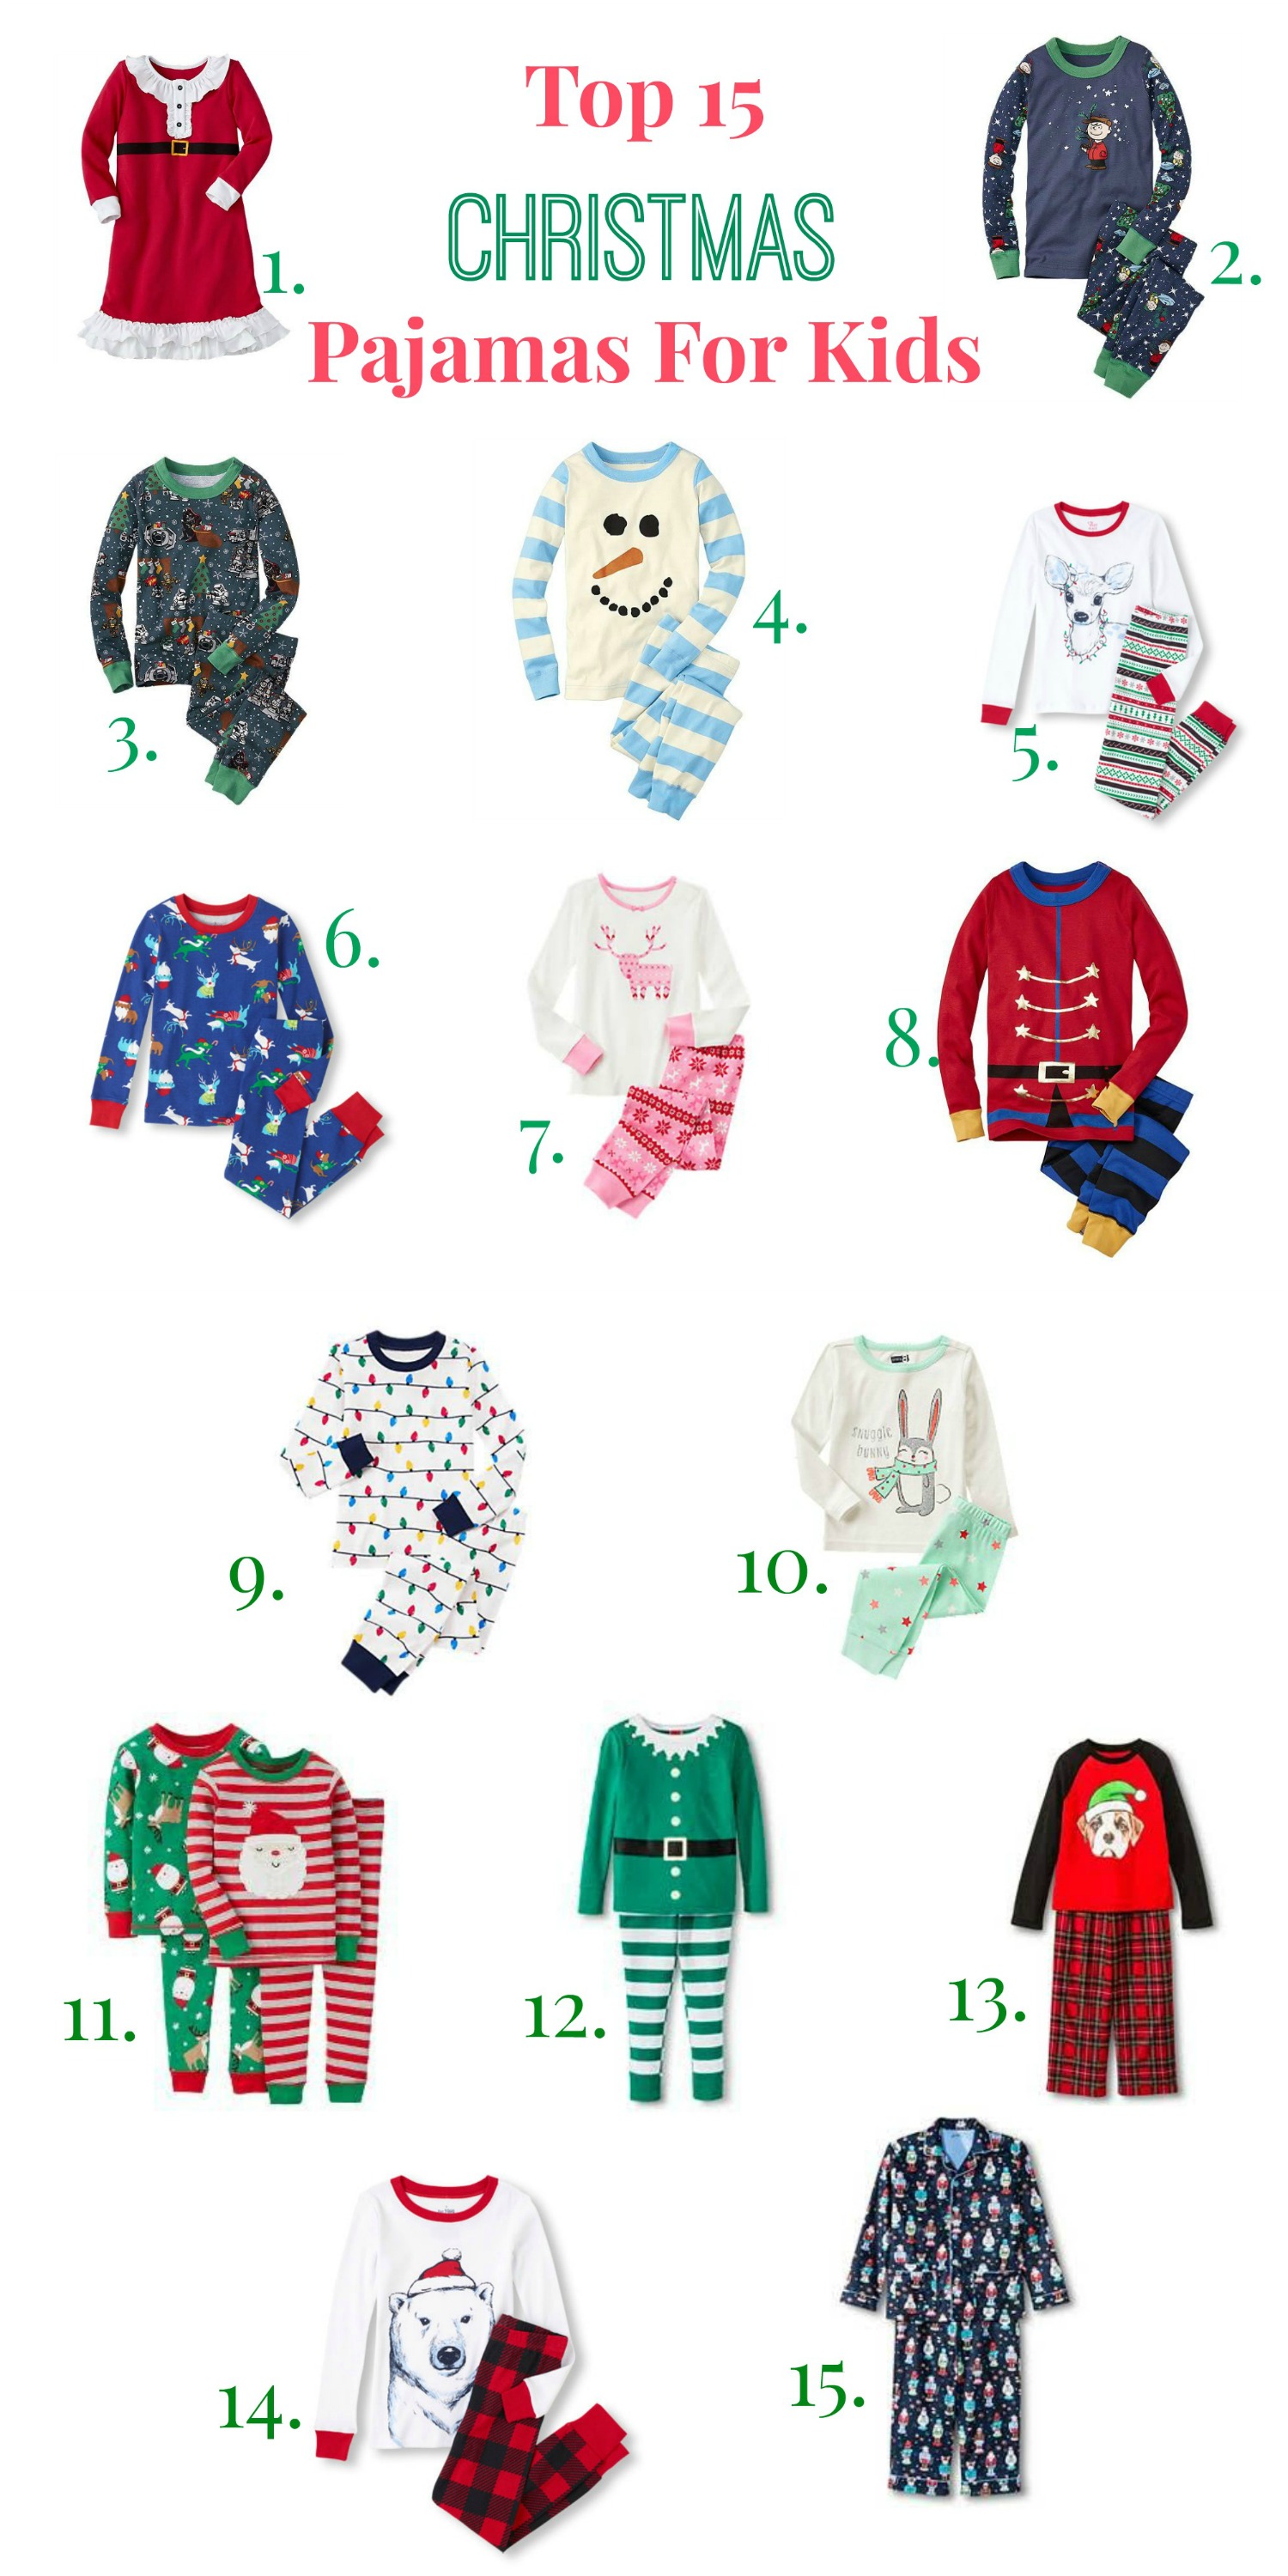 Top 15 Christmas Pajamas for Kids This Year